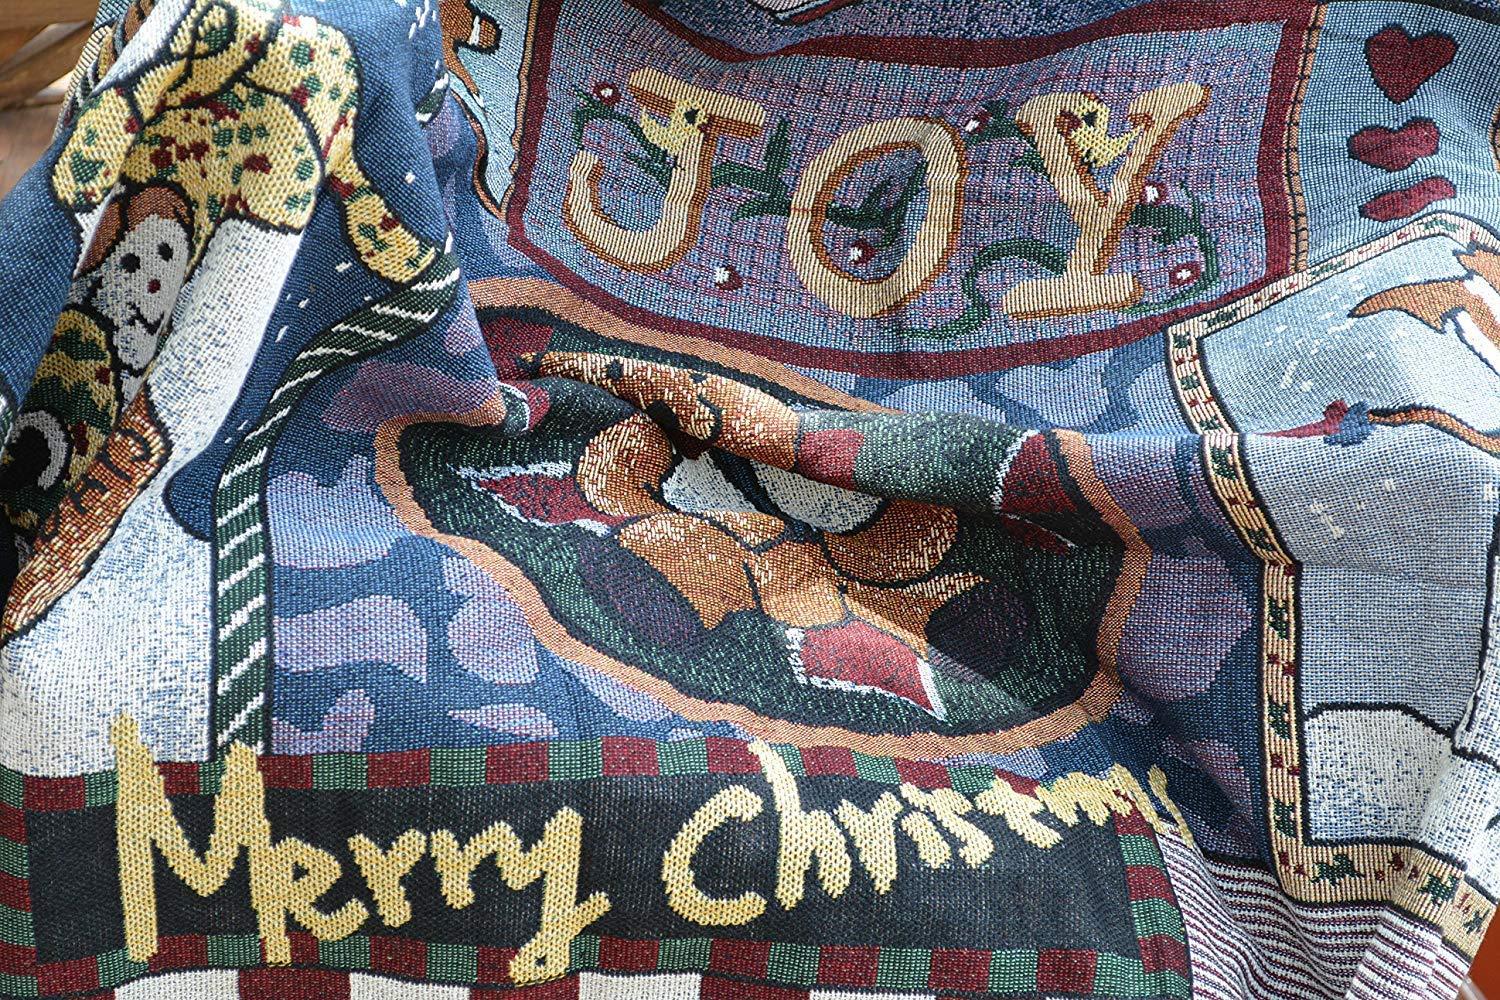 Tache Wonderful Season Snowman Tapestry Throw with Fringe (2270) - Tache Home Fashion